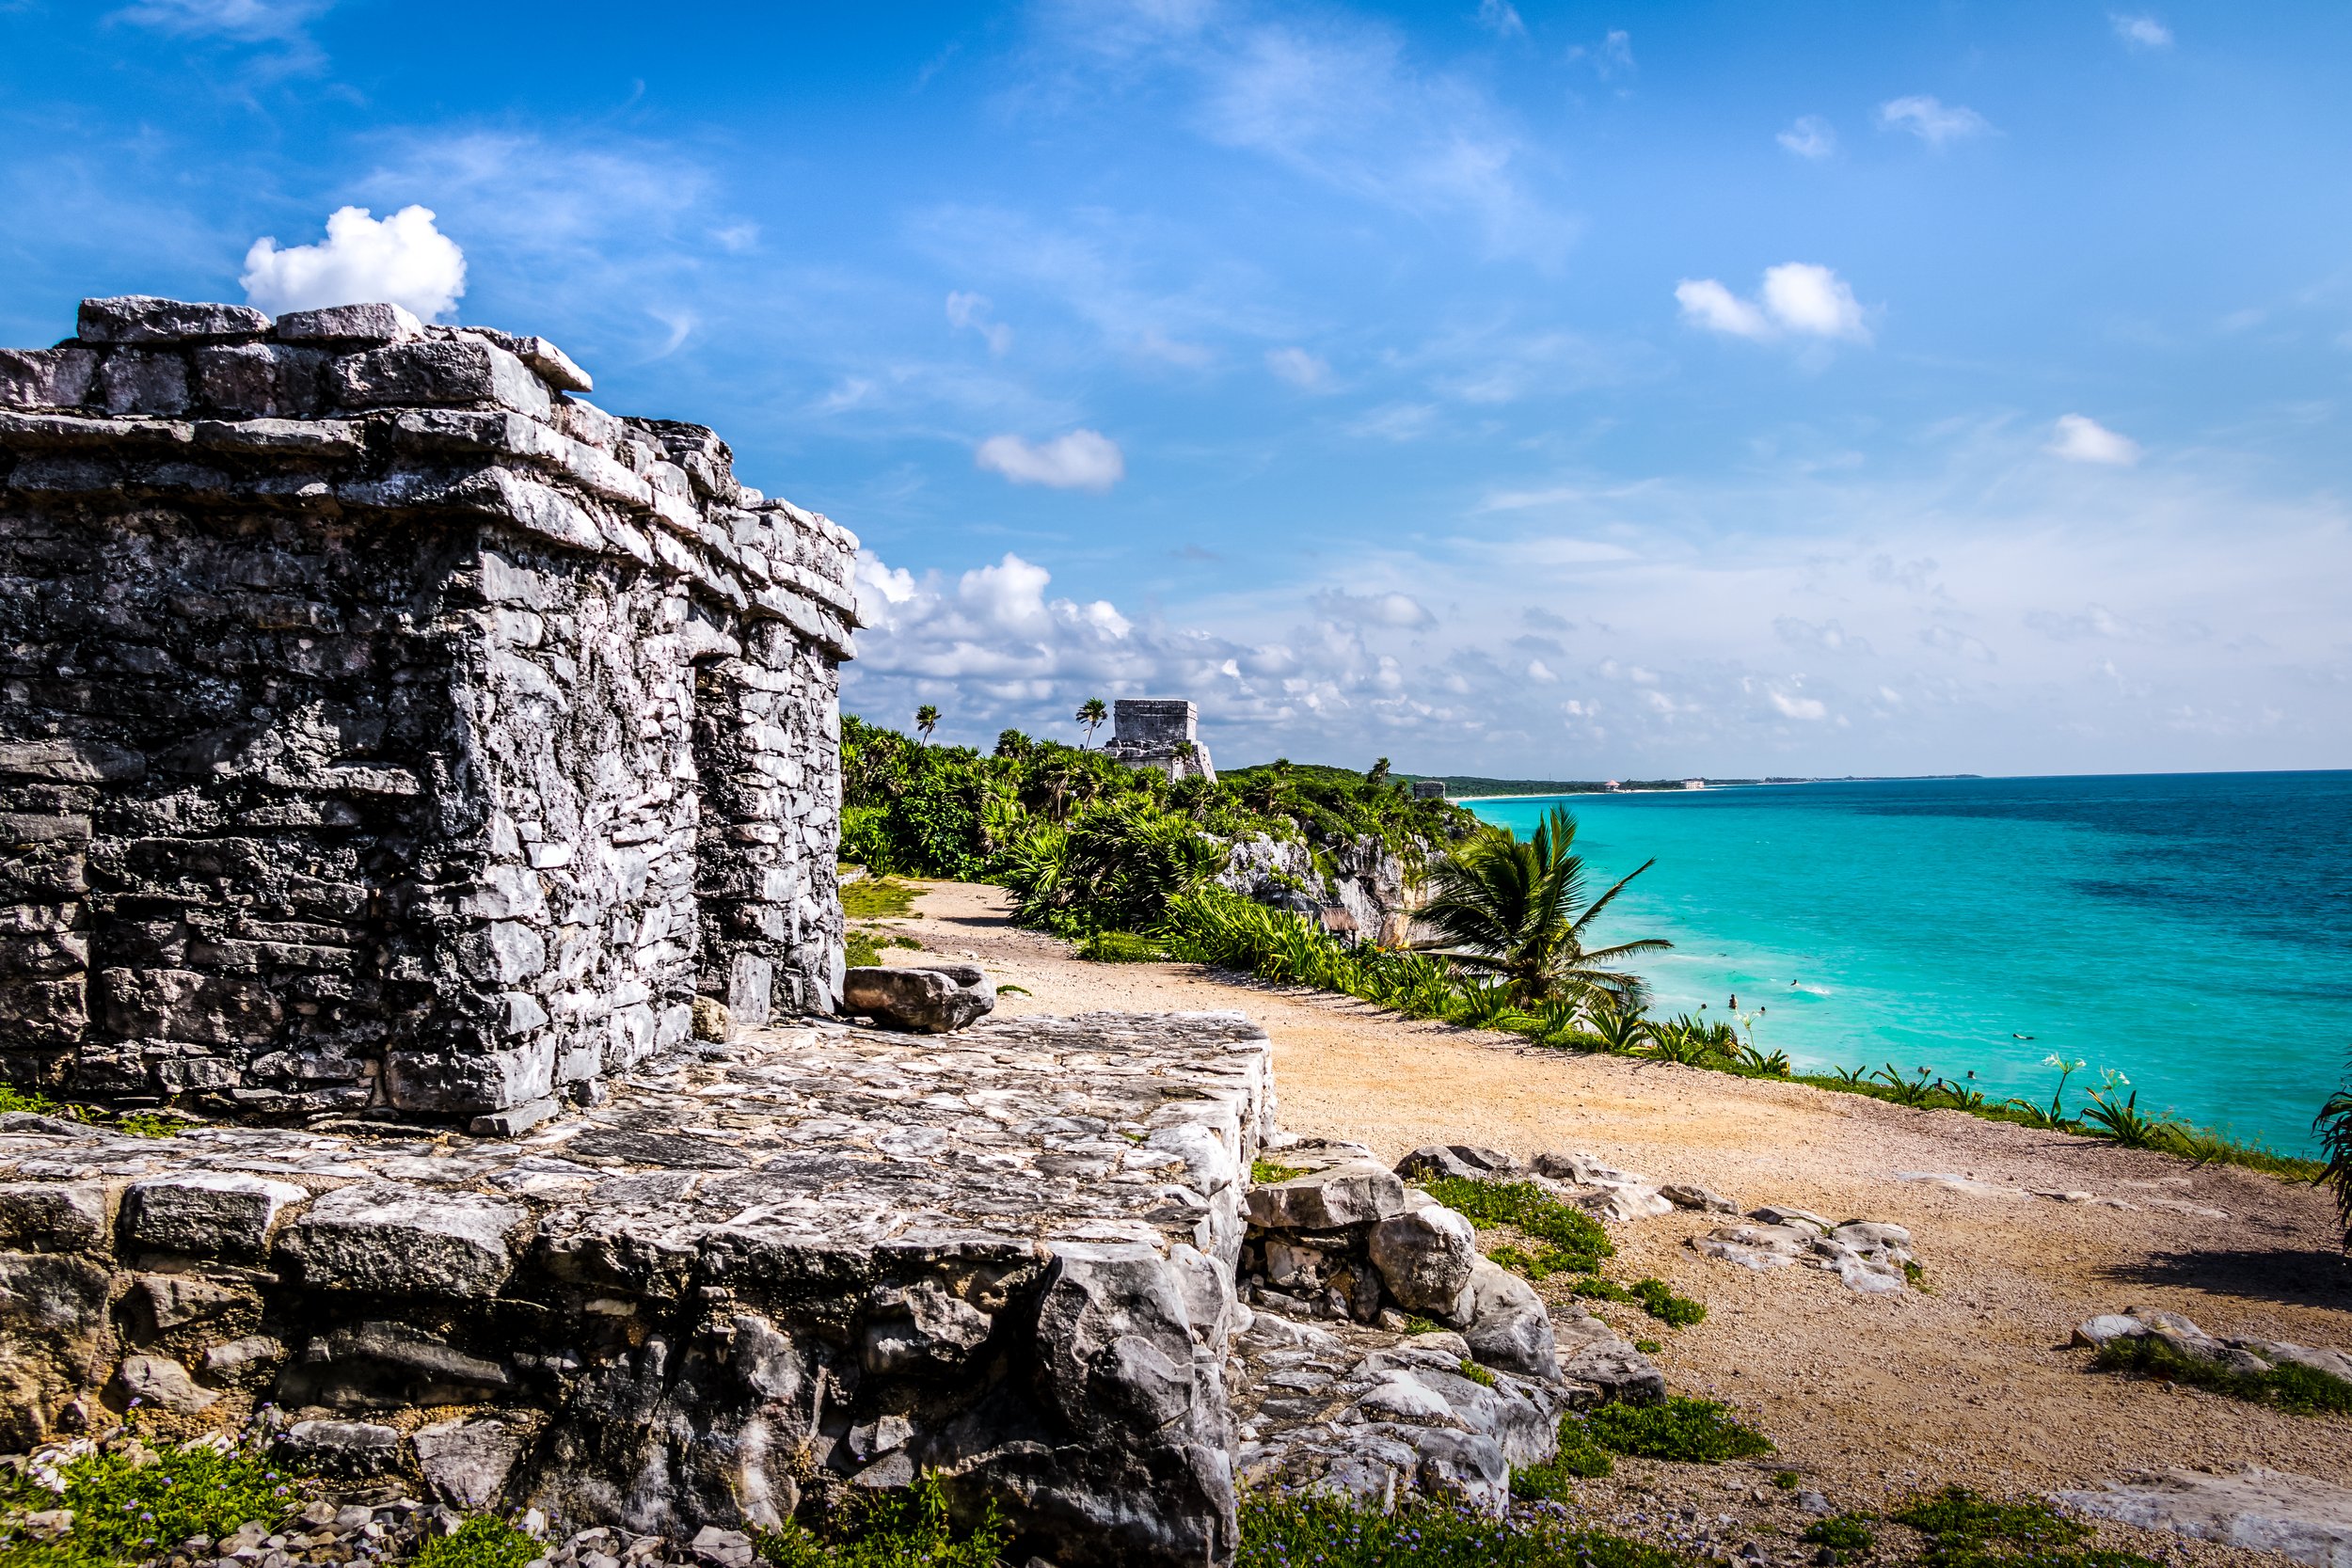 mayan-ruins-and-caribbean-sea-tulum-mexico-2022-03-05-22-48-44-utc.jpg